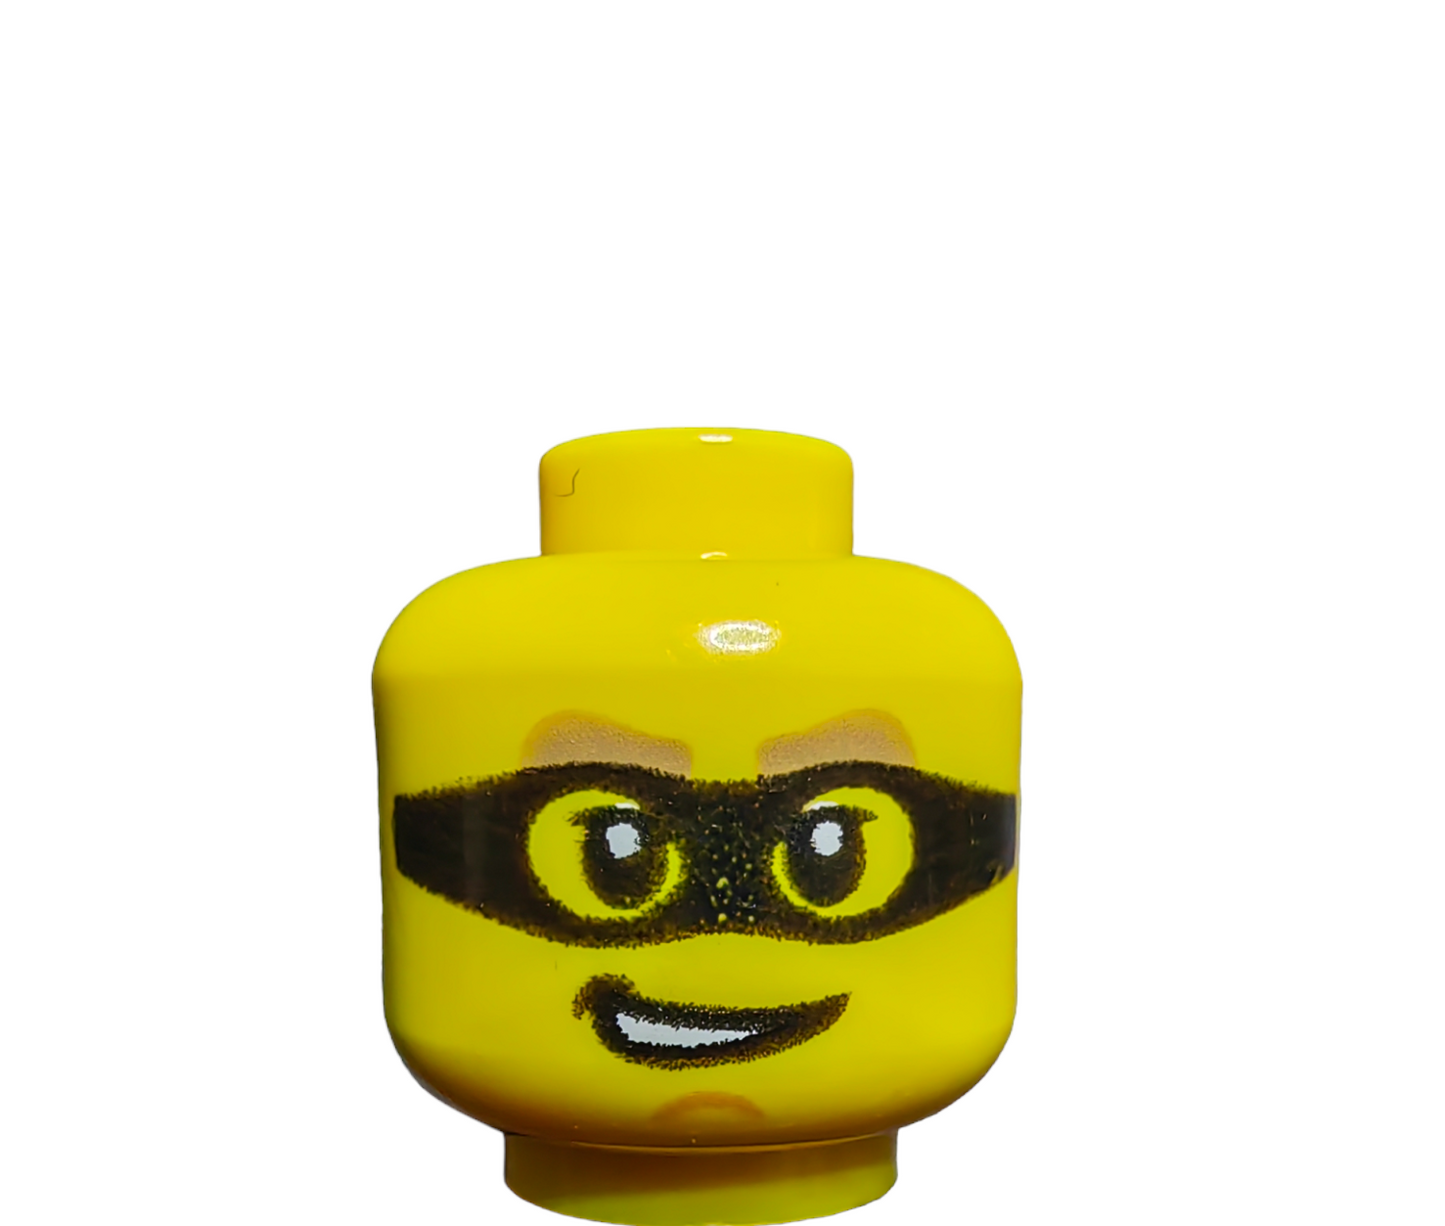 LEGO Head, Tan Thick Eyebrows, Black Mask, Chin Dimple - UB1067